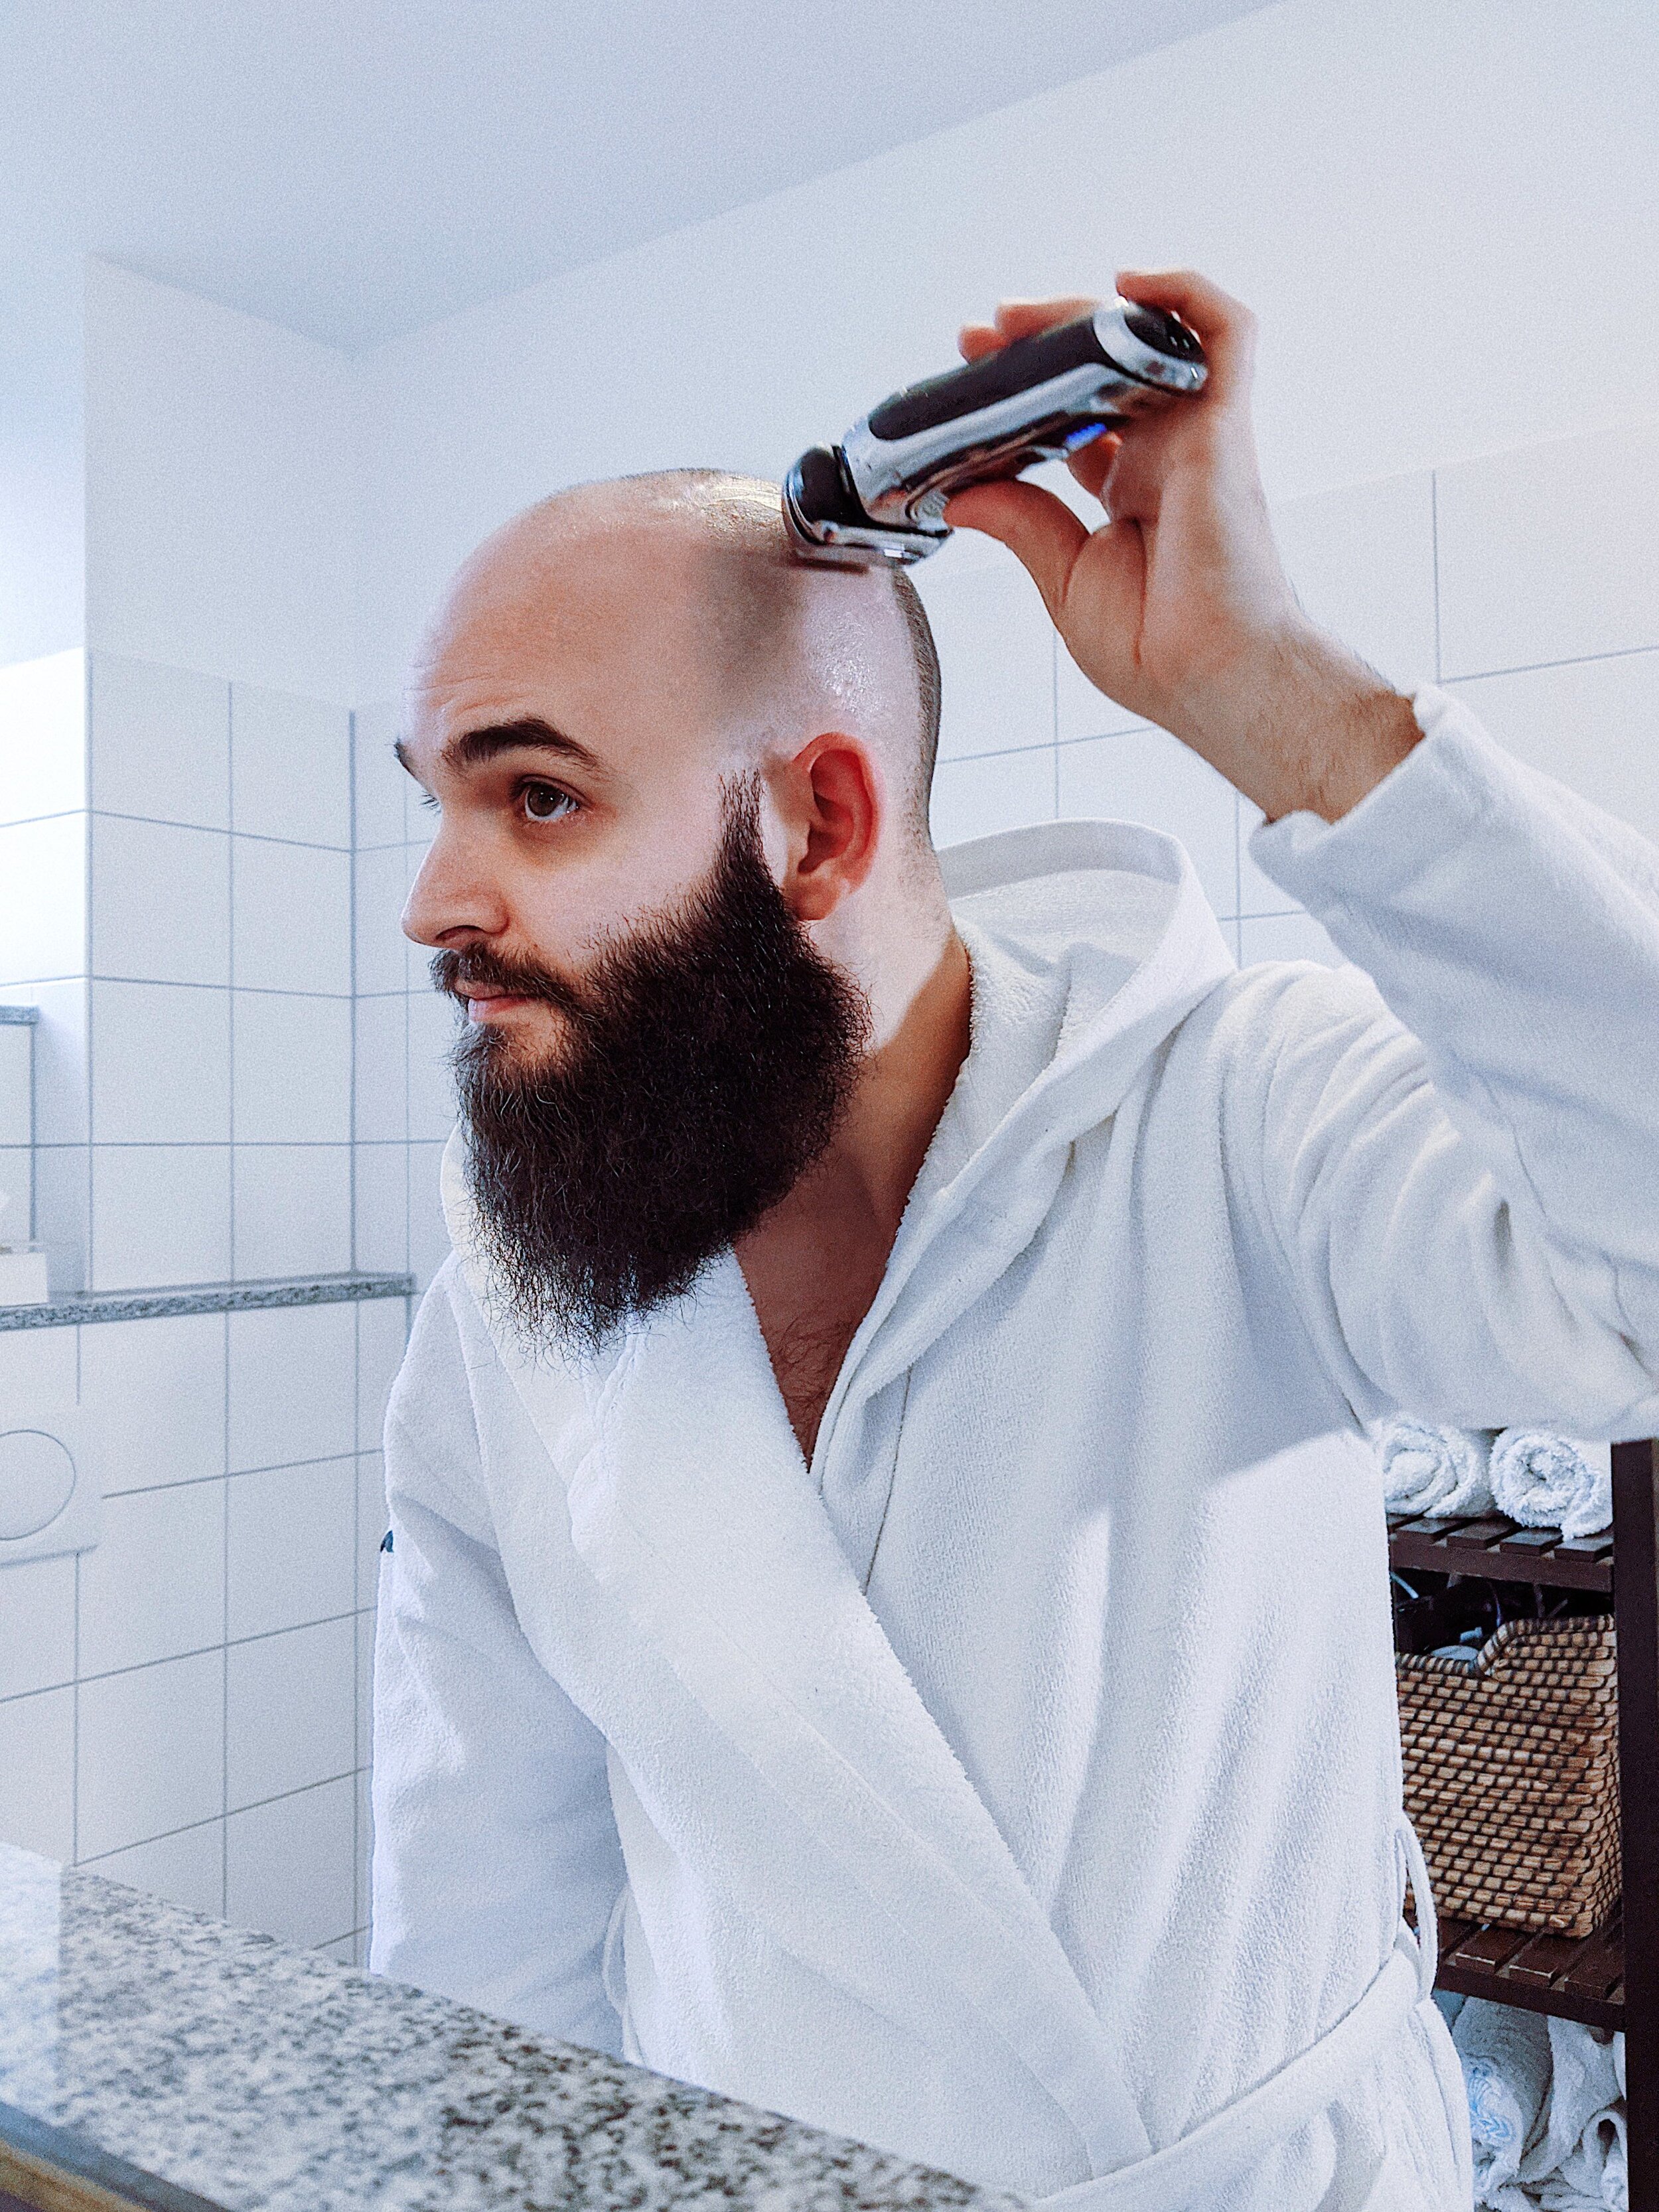 Glatze rasieren frau geschichte